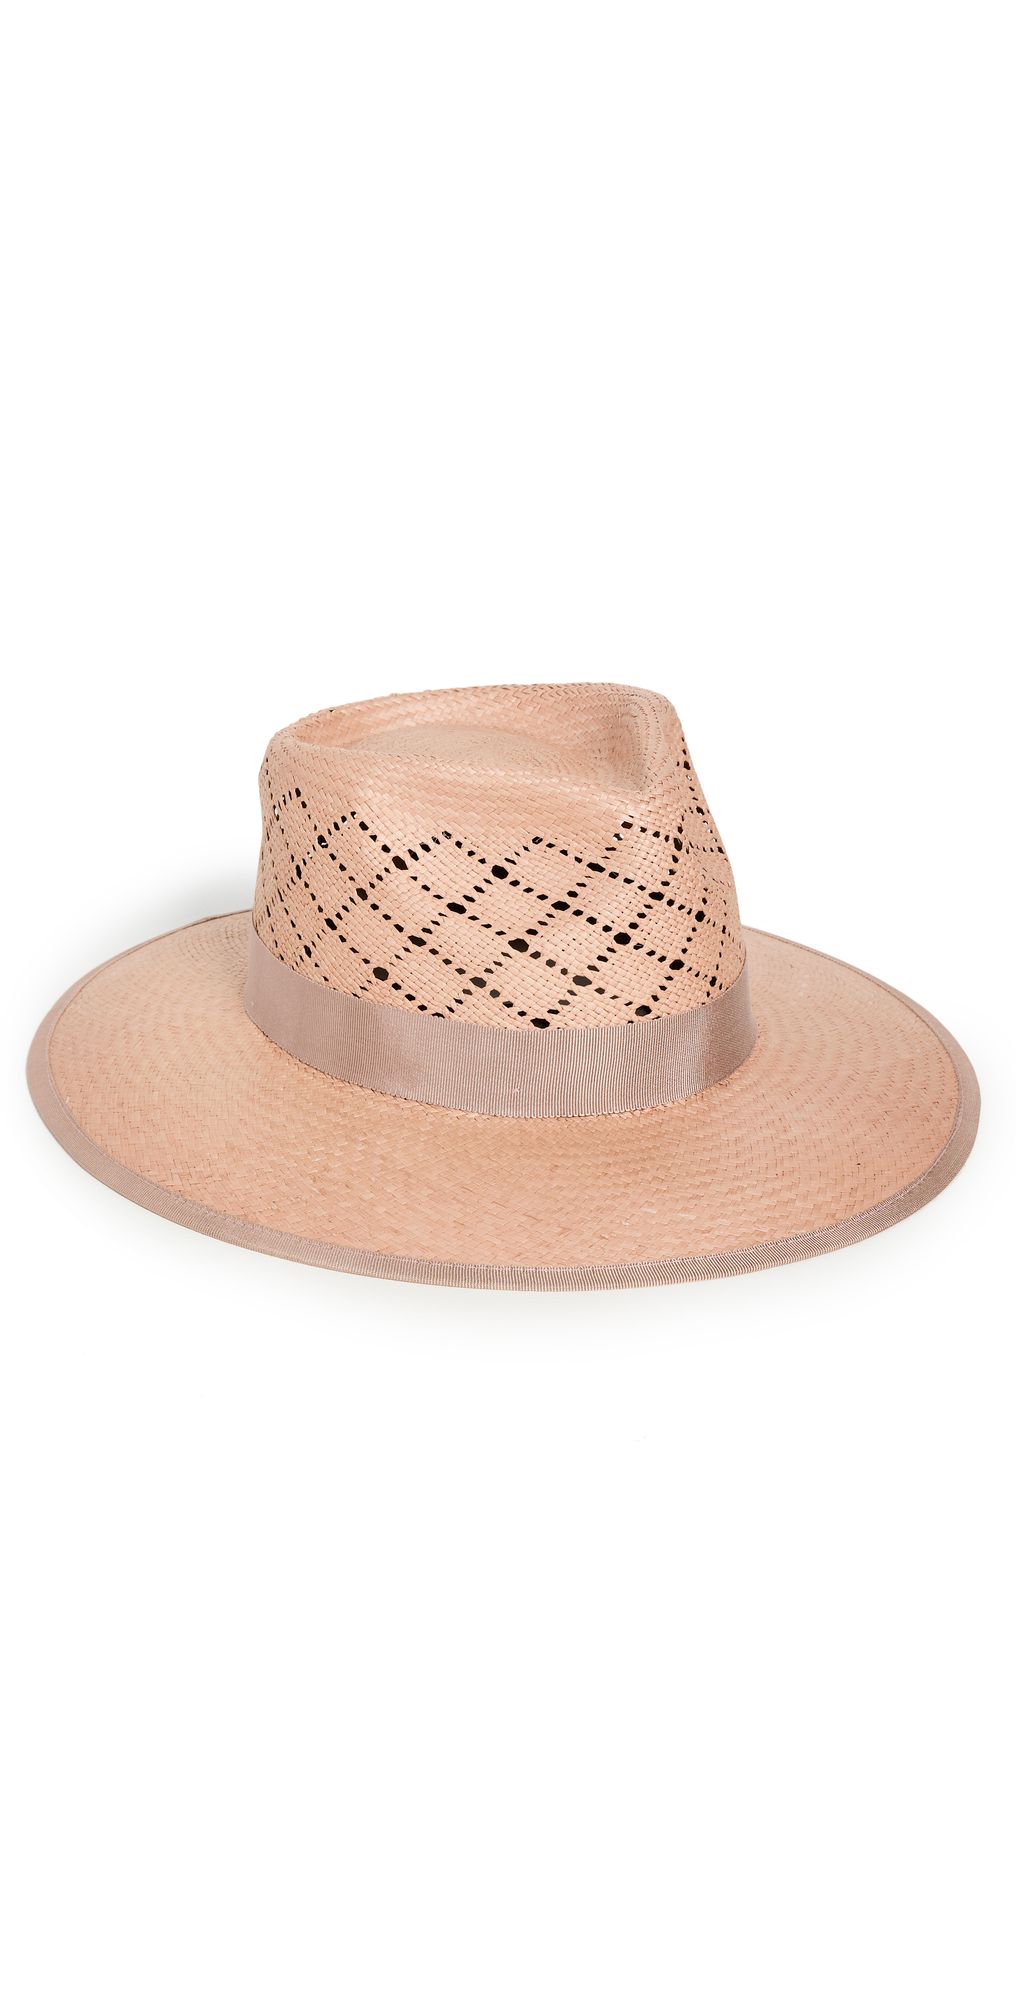 Marigold Straw Hat | Shopbop